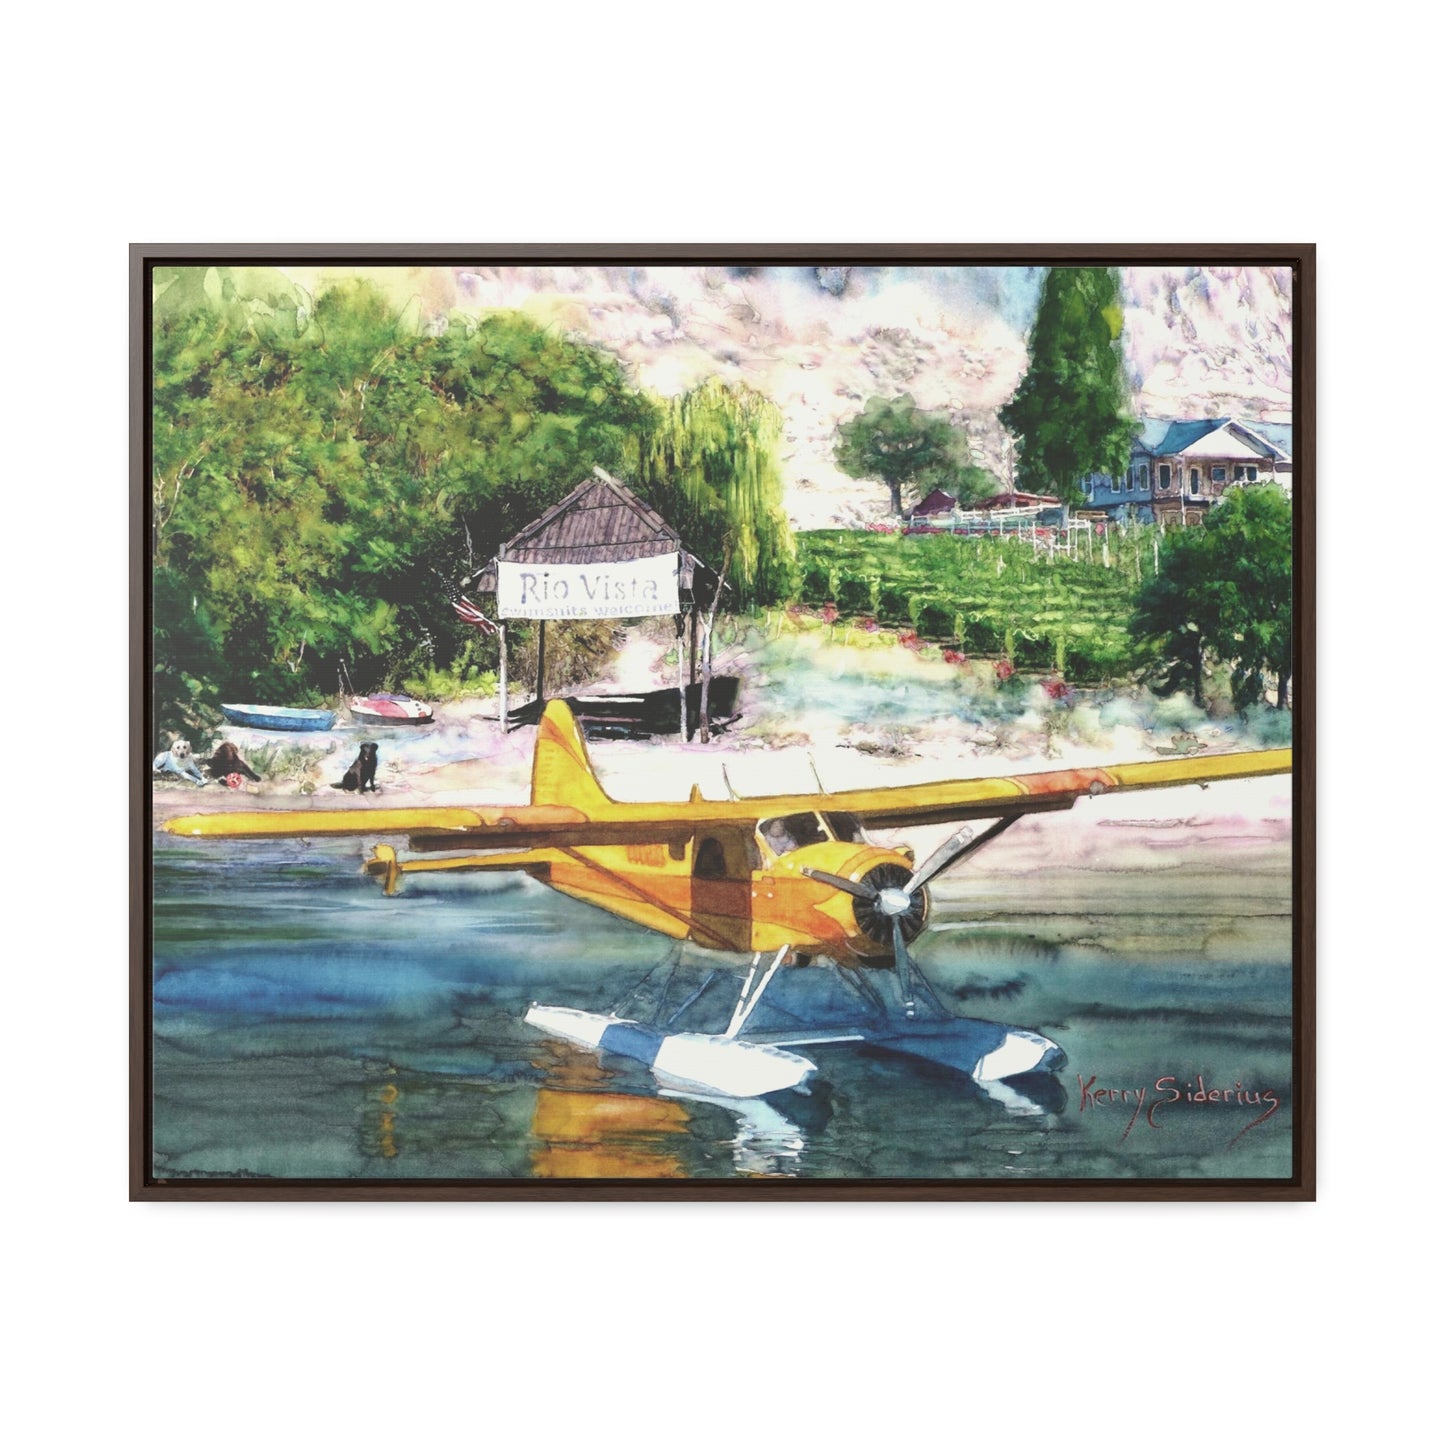 "Happy Landings at Rio Vista" Gallery Canvas Wrap, Horizontal Frame - Kerry Siderius Art 